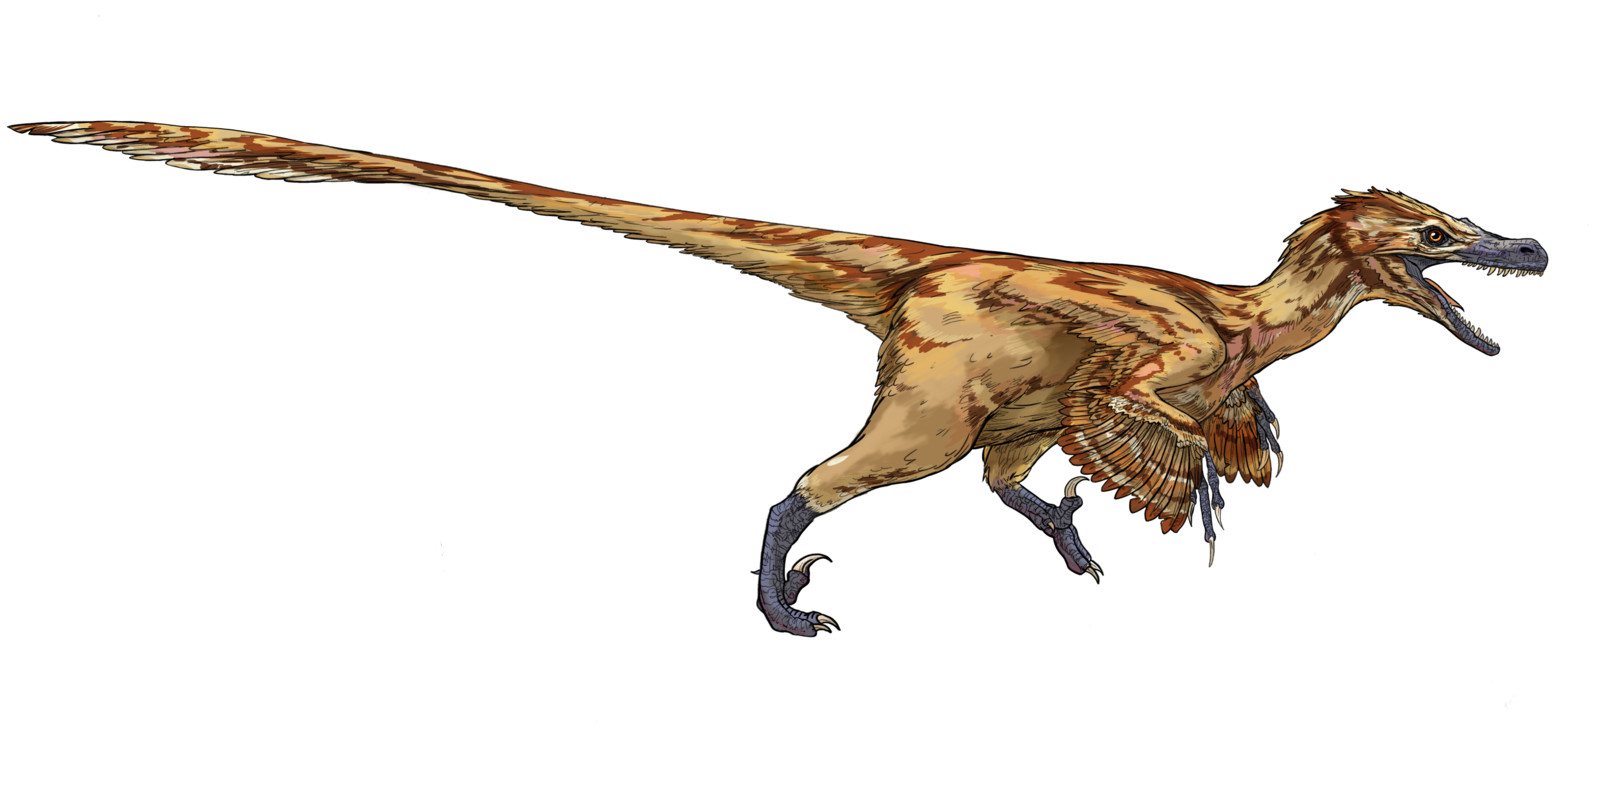 Velociraptor Illustration: Paleo art 